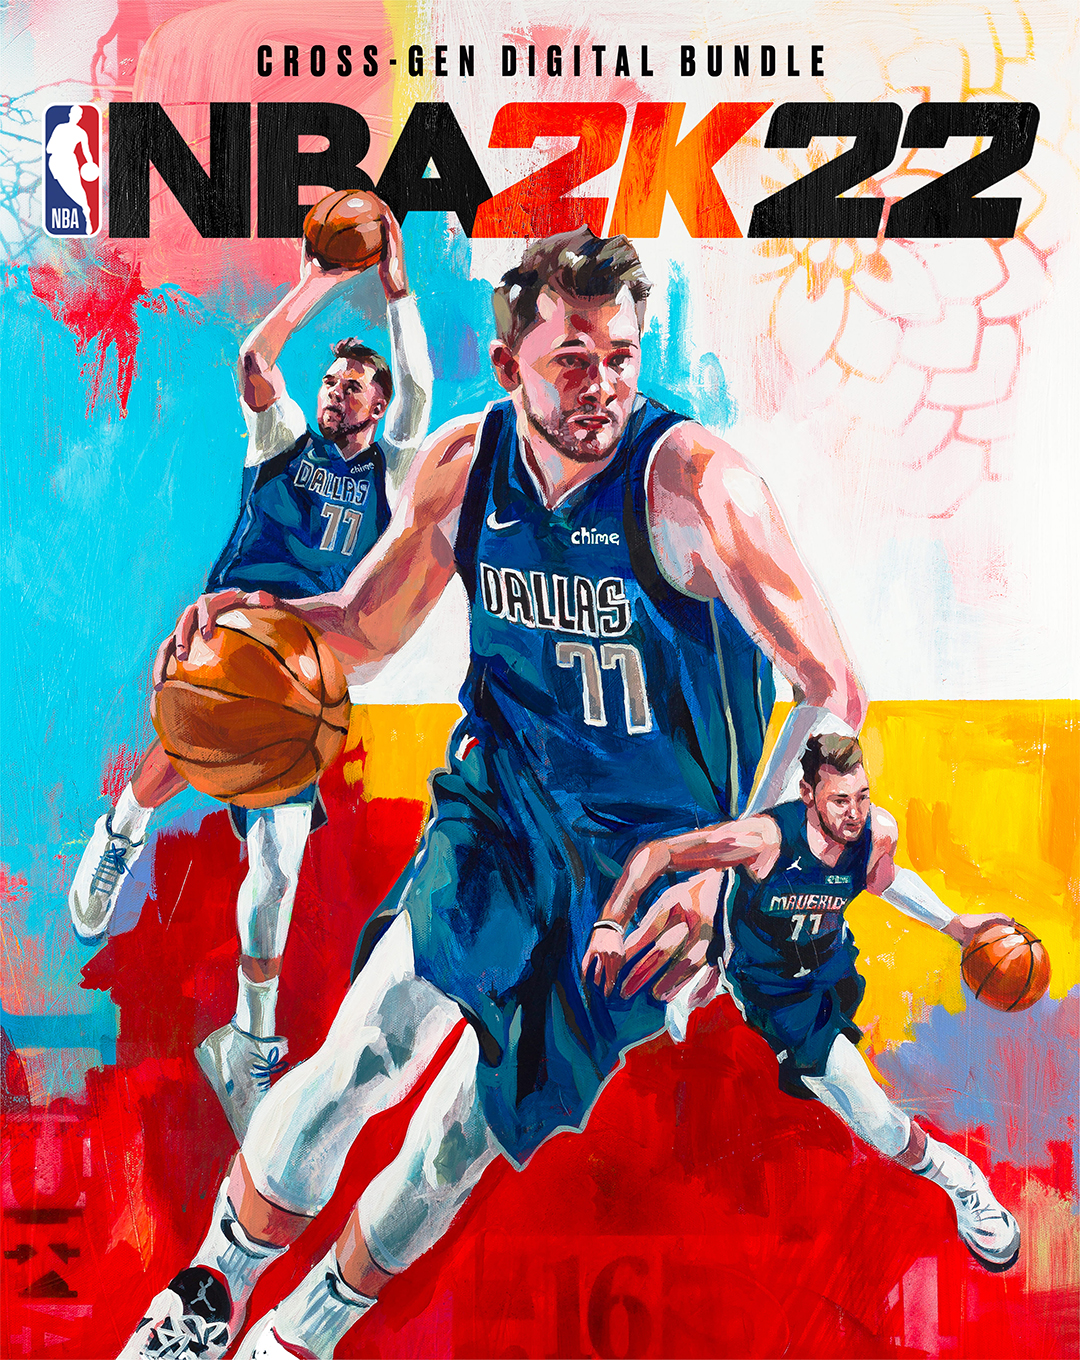 《nba 2k22》封面公开 游戏将于9月10日推出